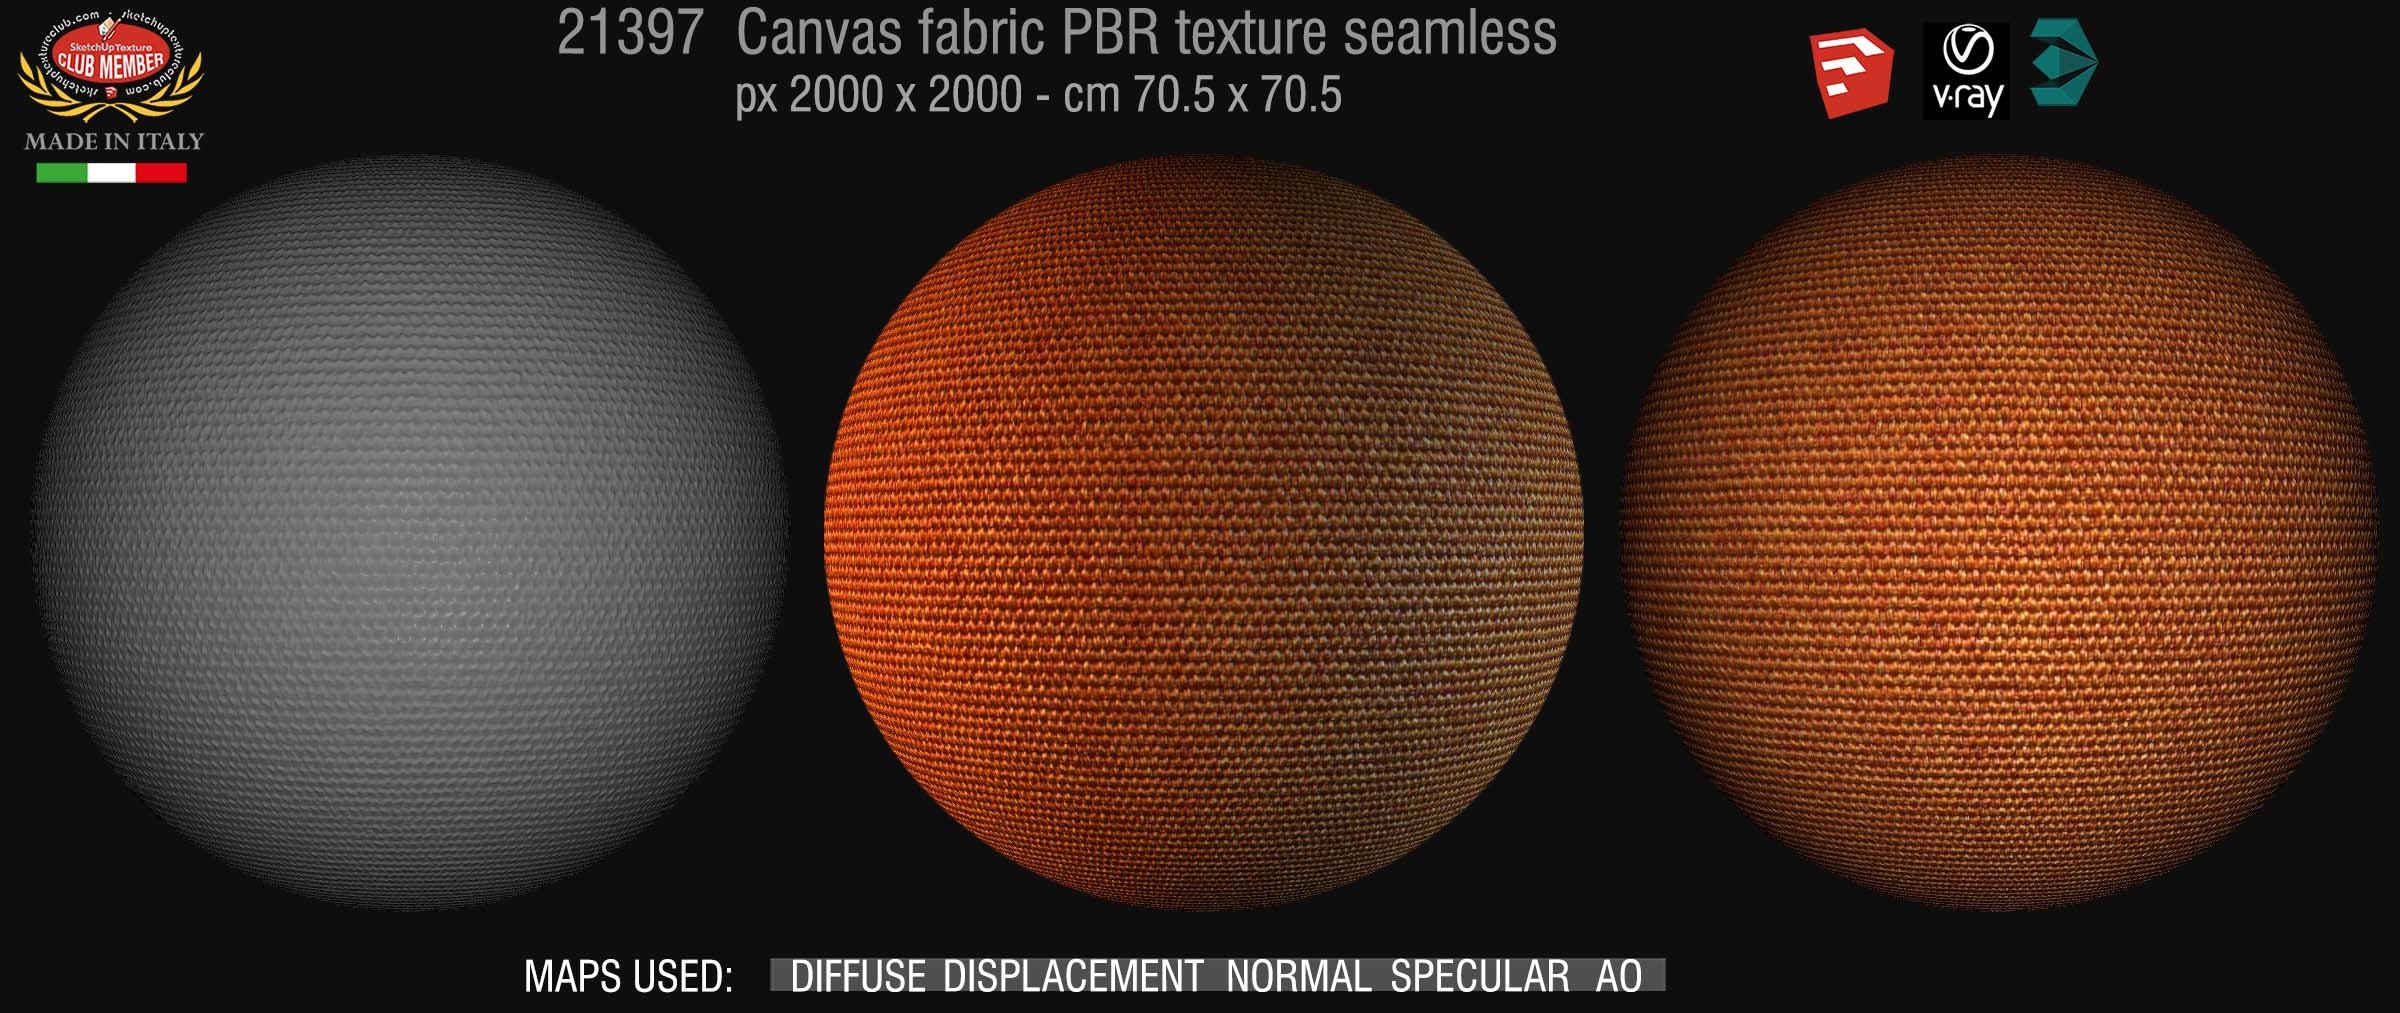 20397 Canvas fabric PBR texture seamless DEMO